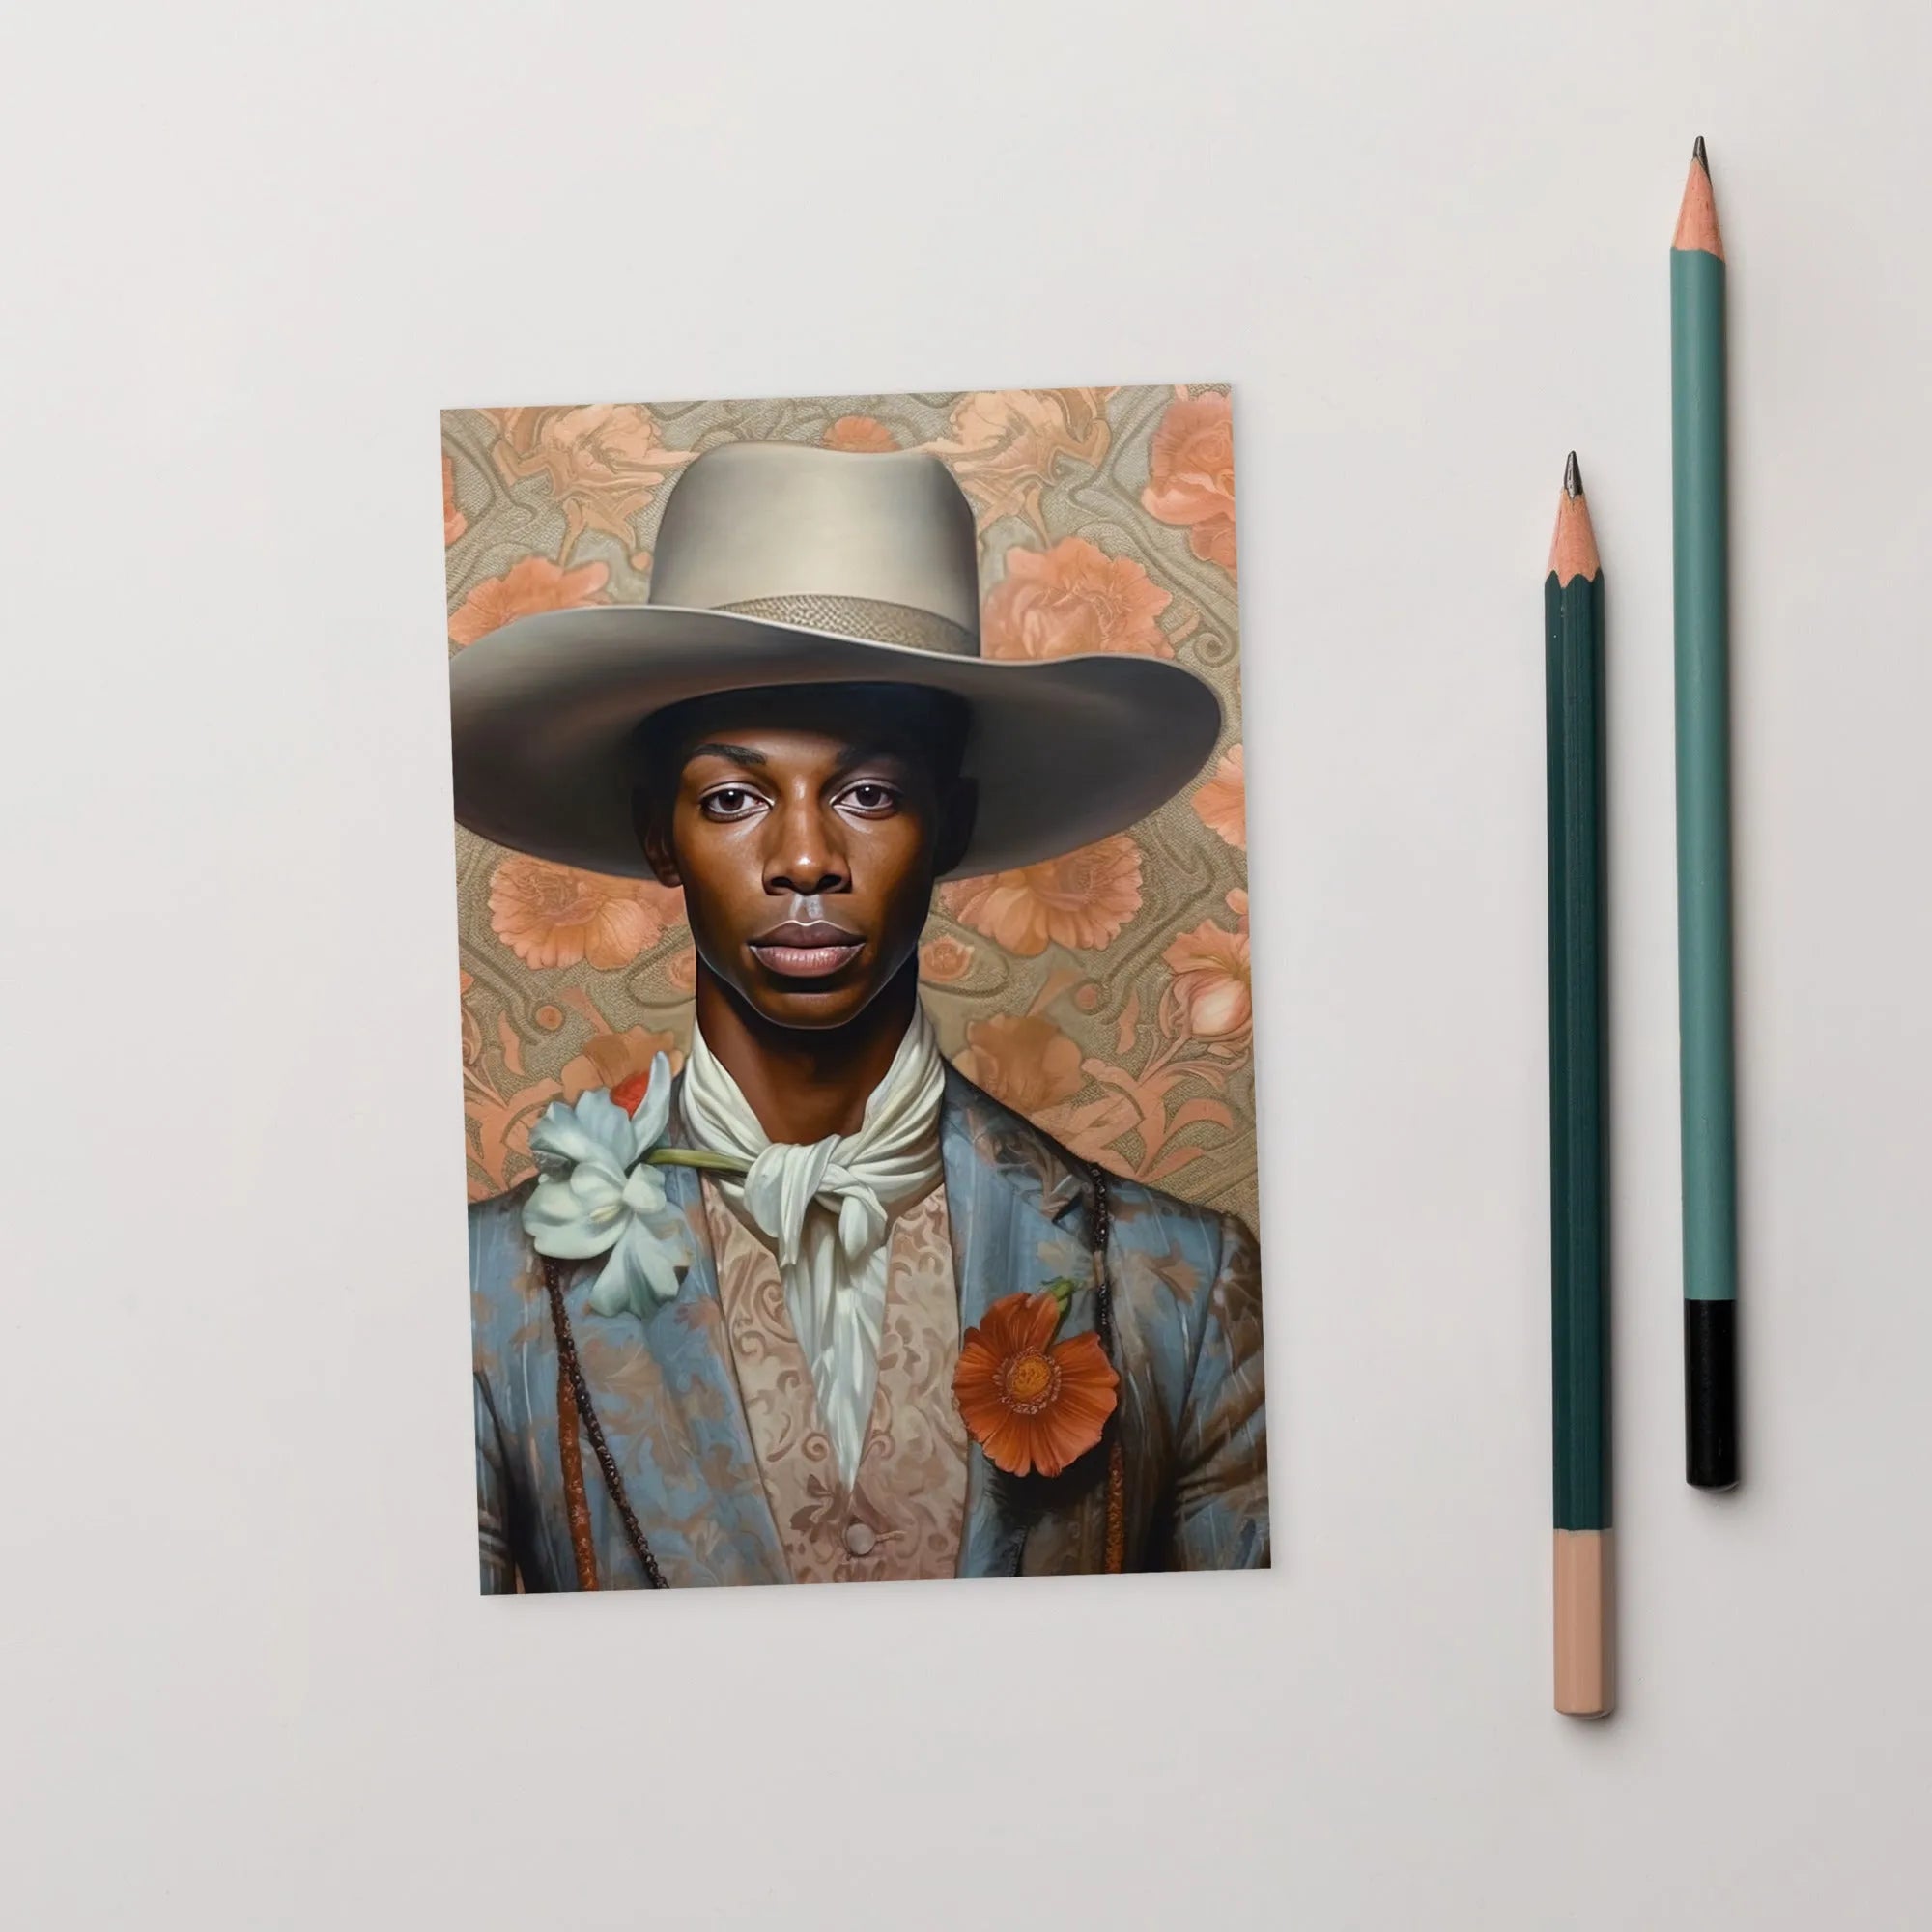 Apollo - Gay Black Cowboy Art - Afroamerican Queerart Dandy - 4’x6’ - Posters Prints & Visual Artwork - Aesthetic Art